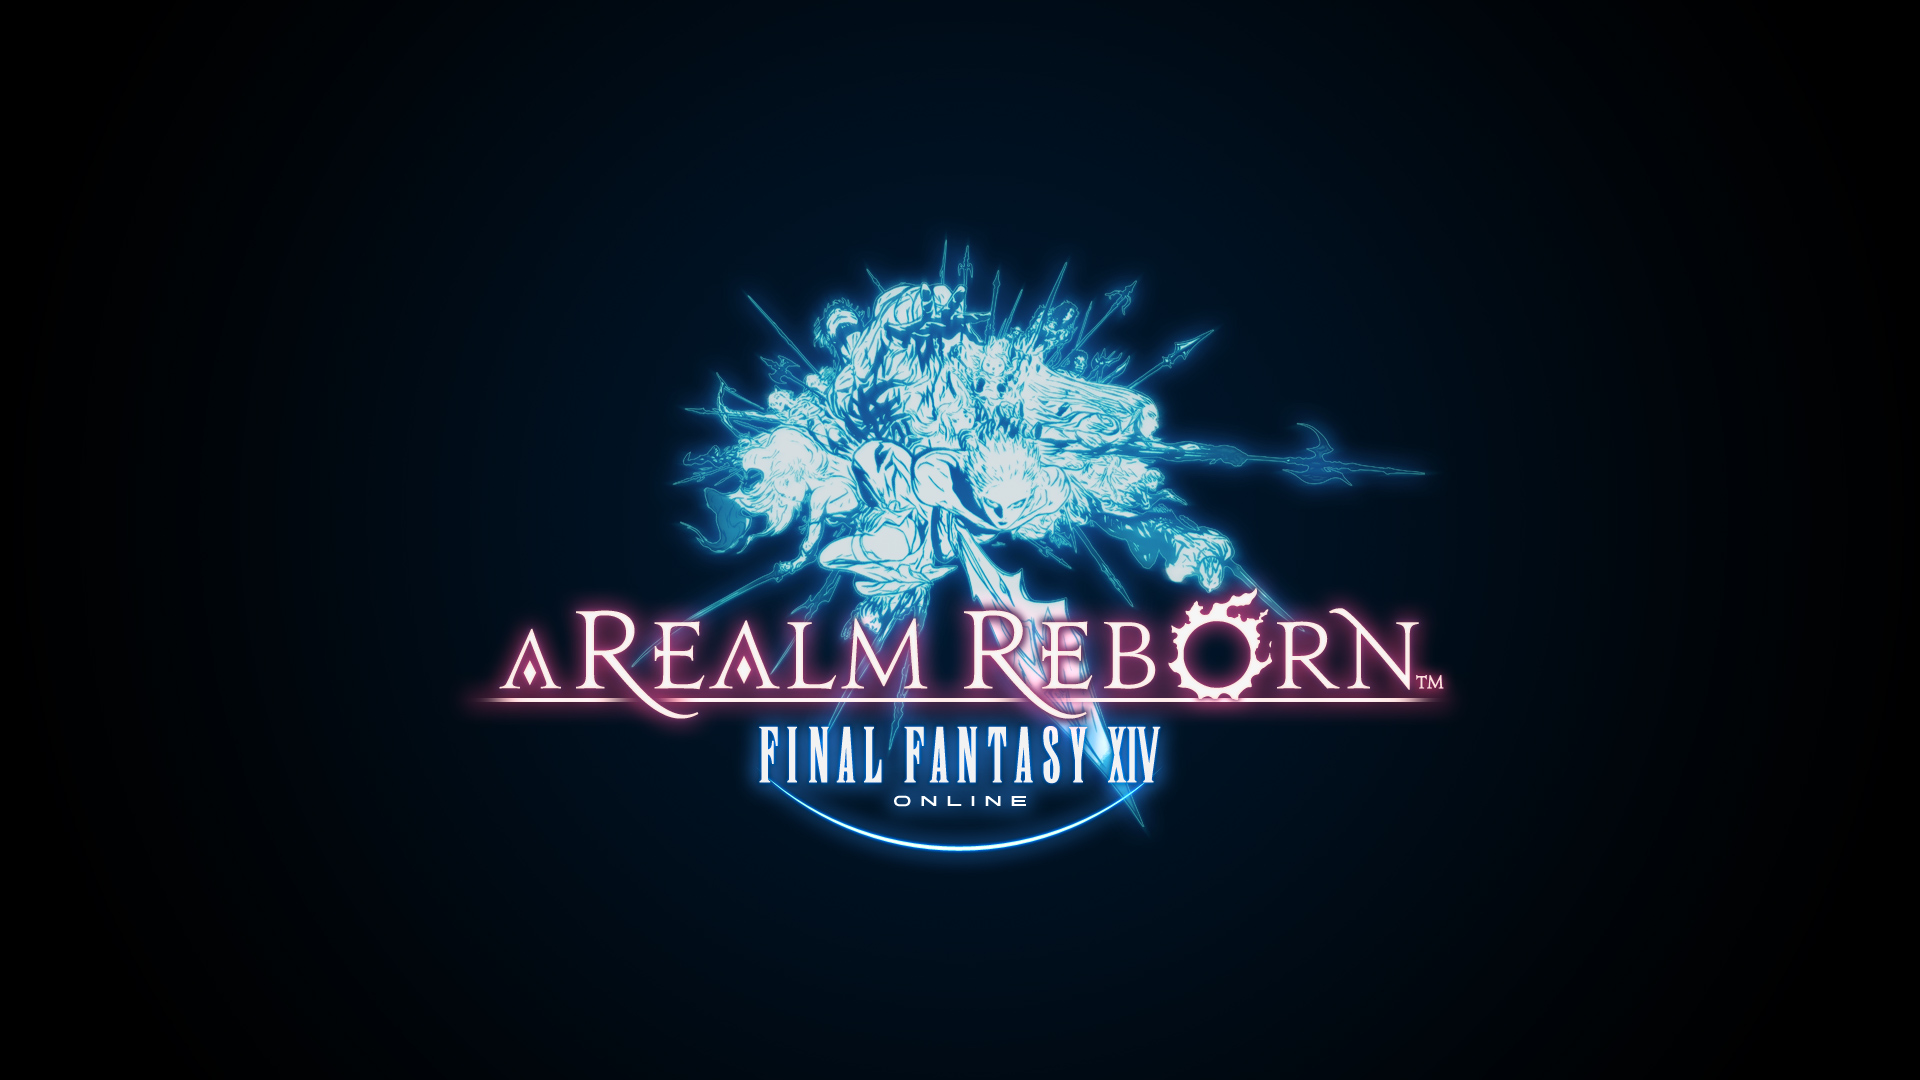 Final Fantasy Xiv A Realm Reborn Jpg